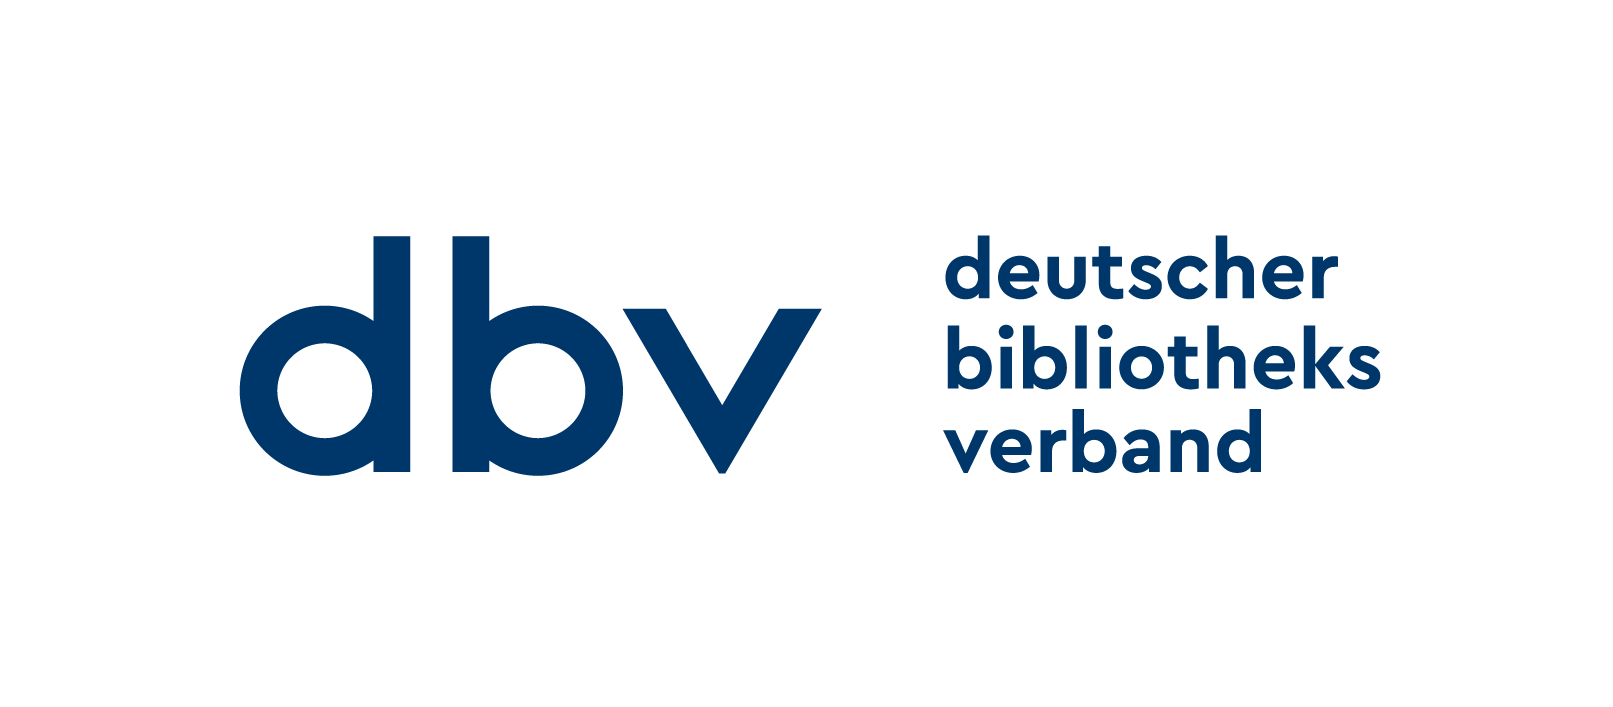 German Library Association (dbv)